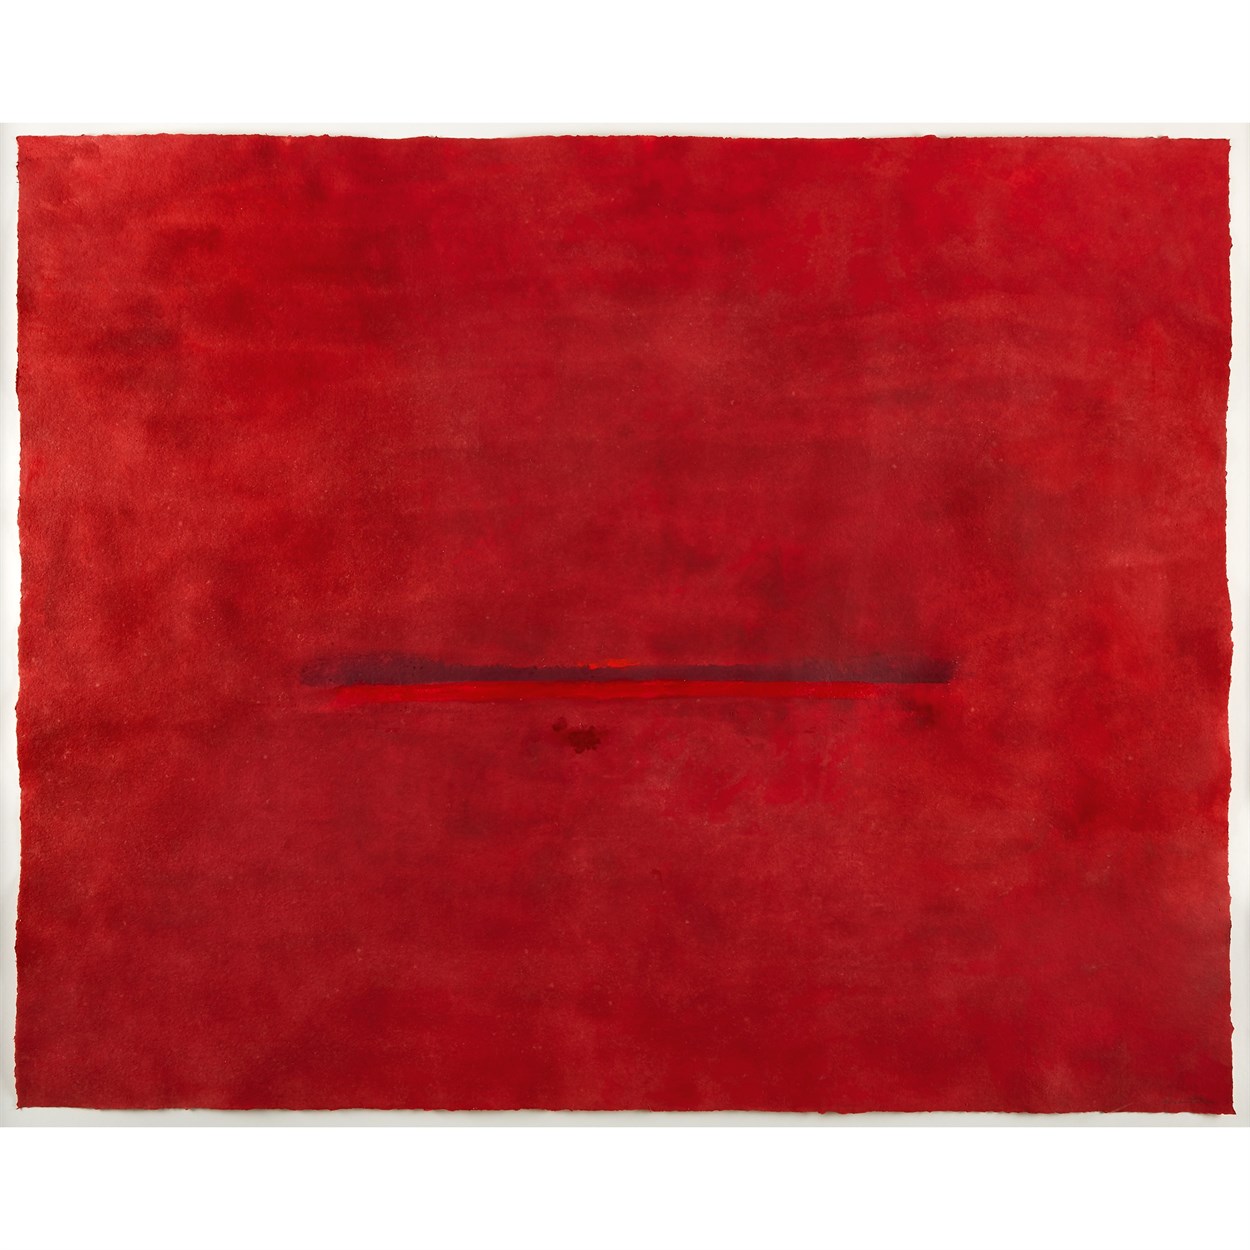 Lot 52 - Helen Frankenthaler (American, 1928-2011)